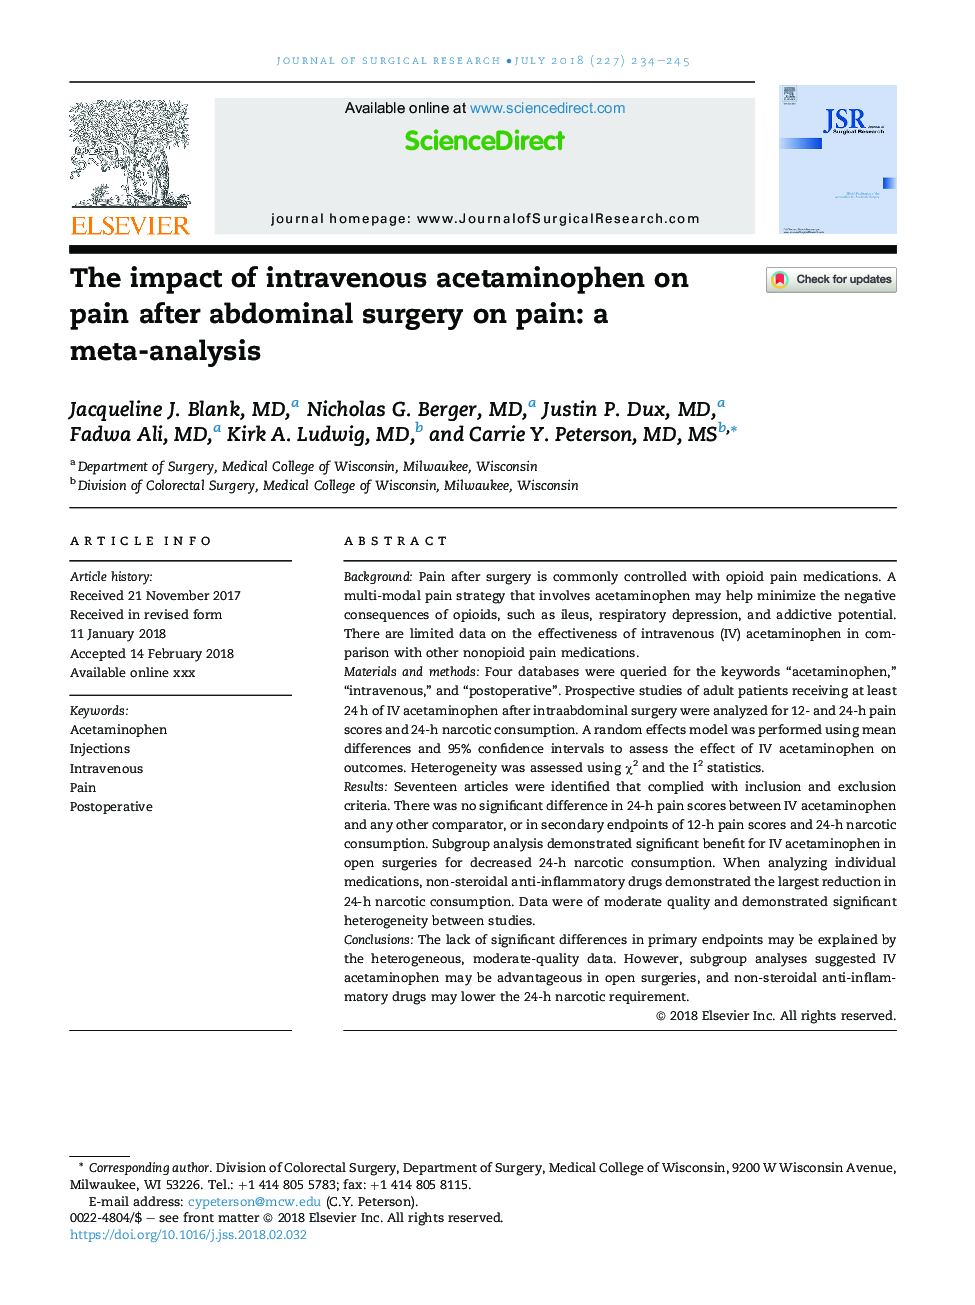 The impact of intravenous acetaminophen onÂ pain after abdominal surgery: a meta-analysis